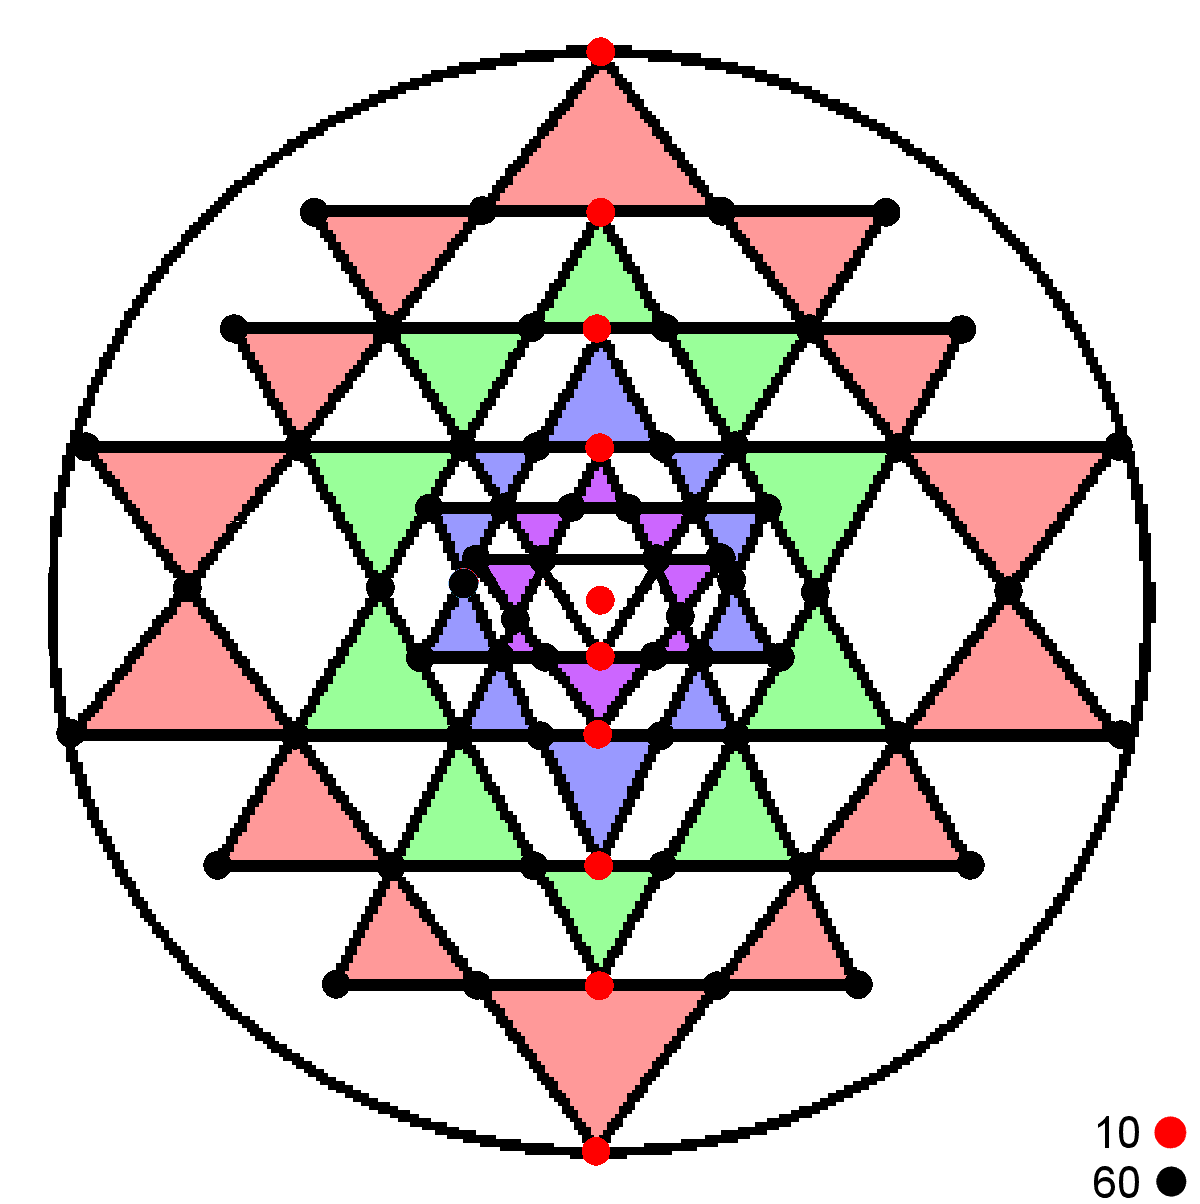 (10+60) corners of triangles in the Sri Yantra